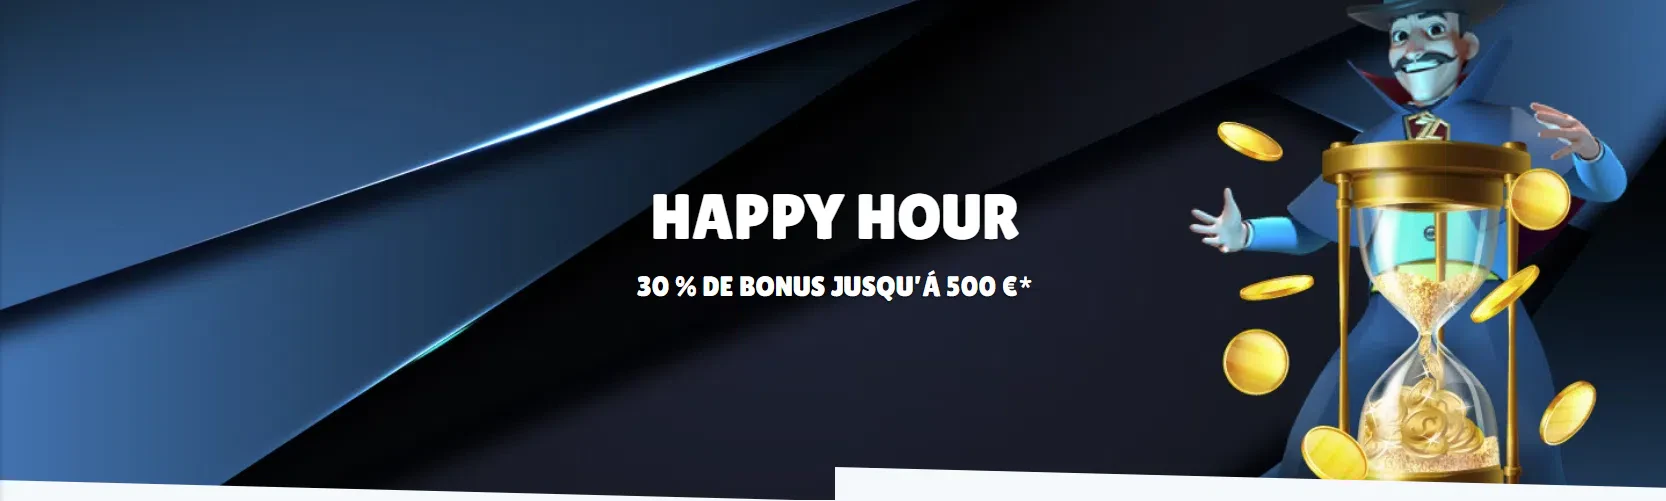 Happy Hour jusqu'à 500€